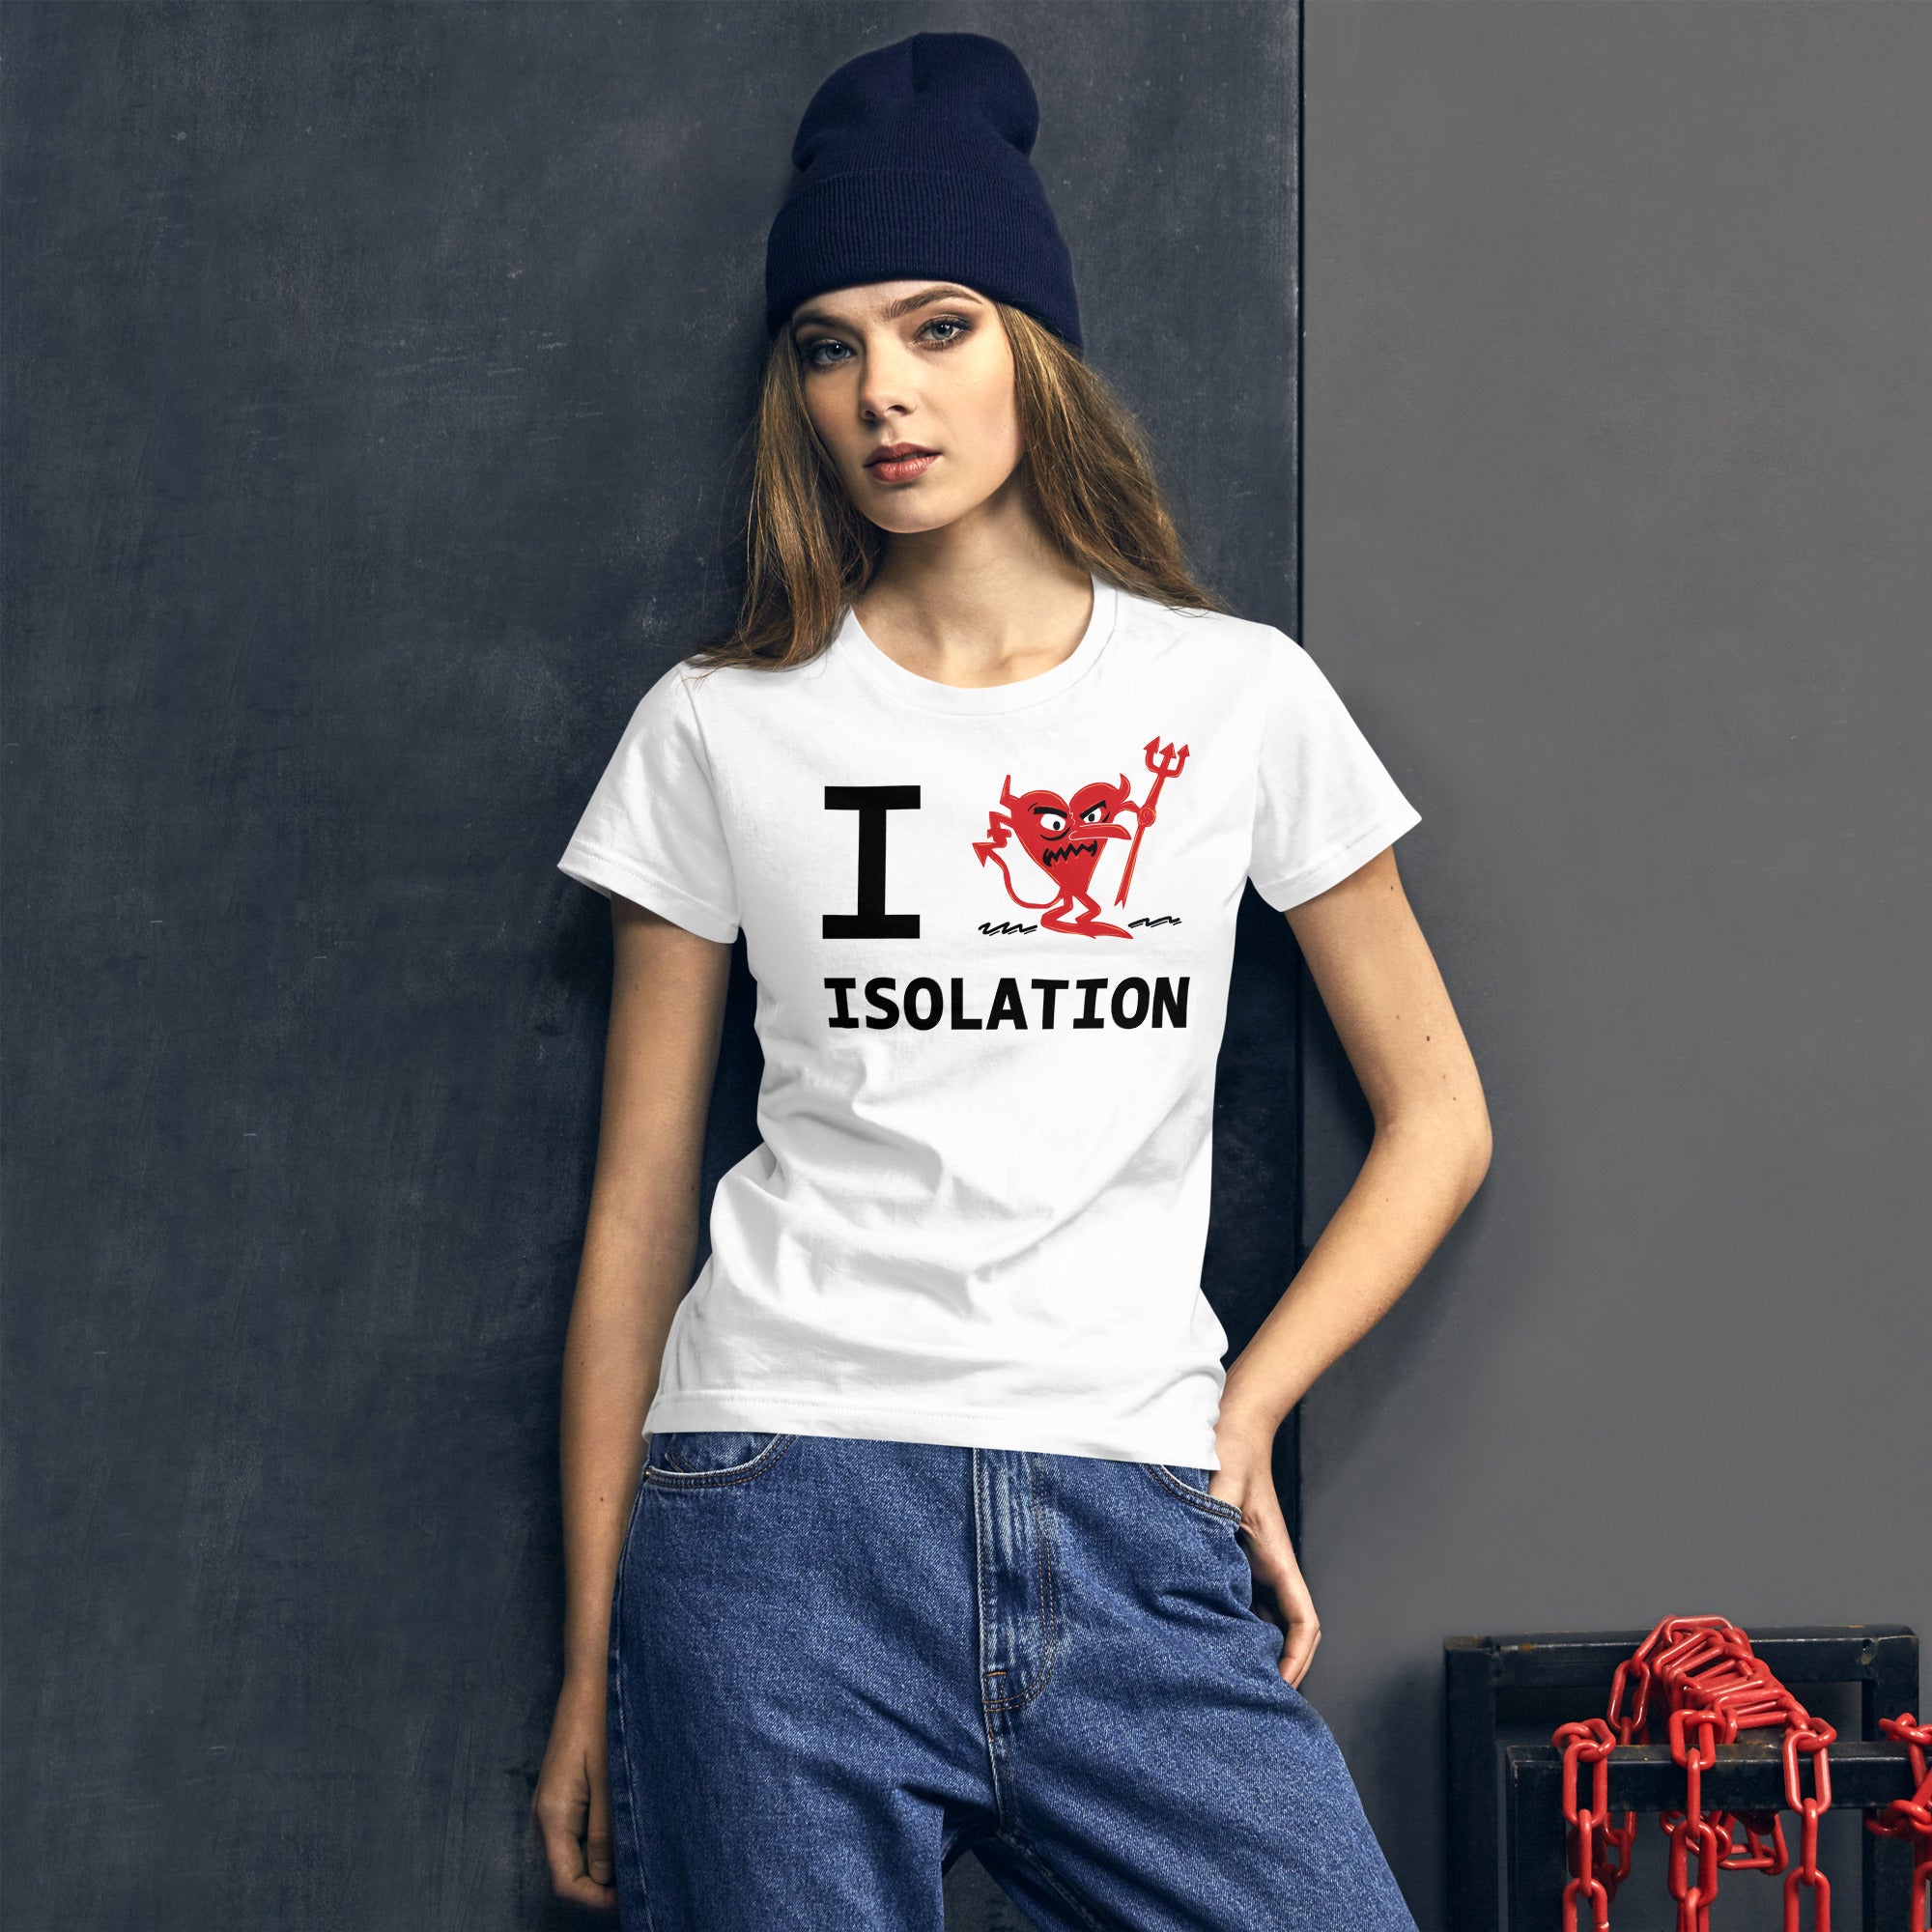 ISOLATION Women's short sleeve t-shirt